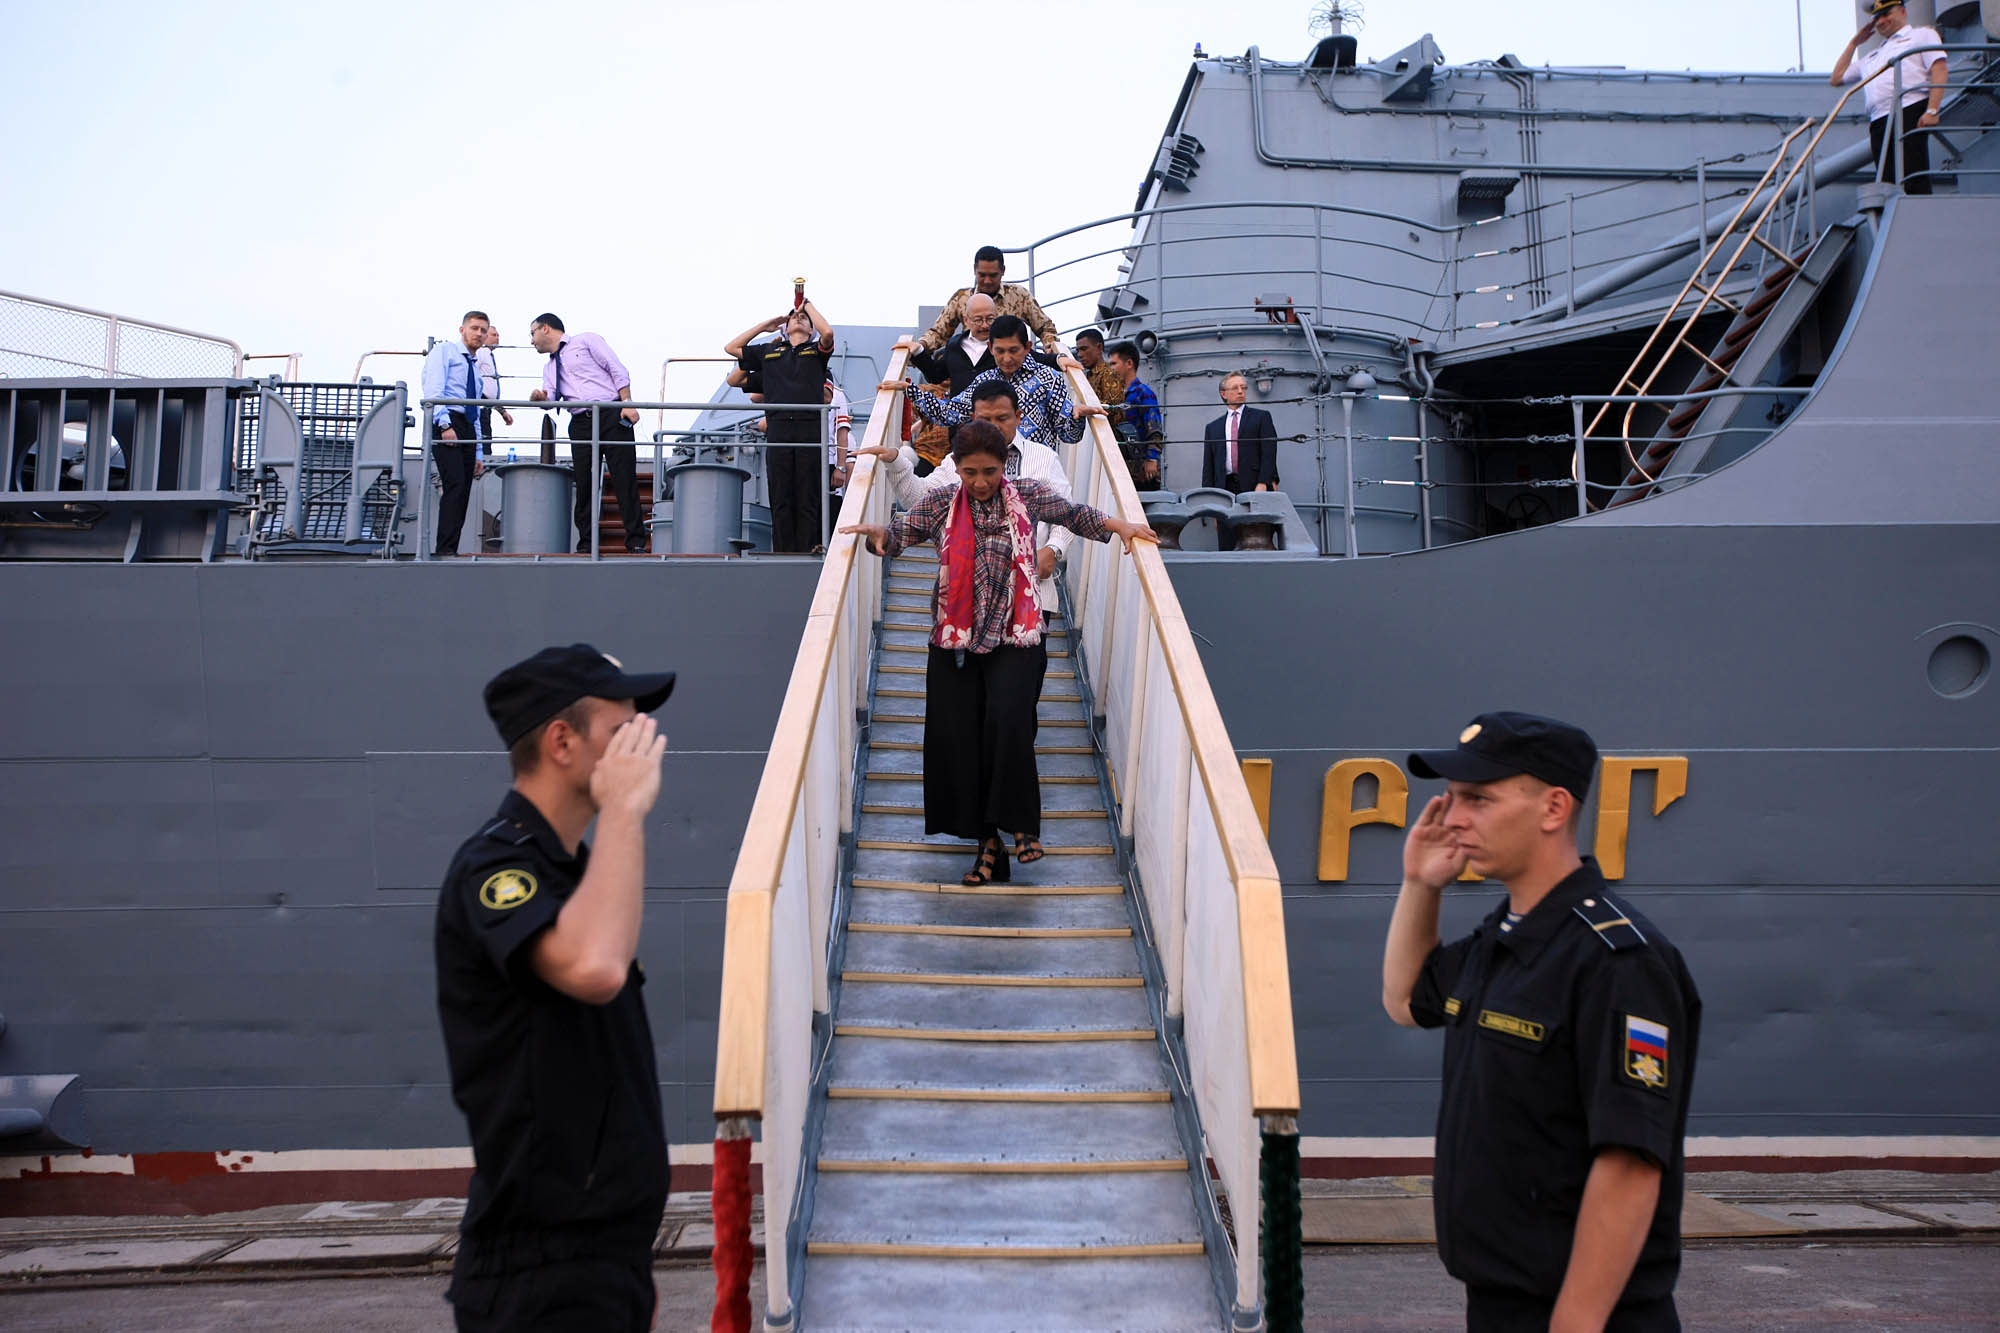 Menteri Kelautan dan Perikanan Susi Pudji Astuti menuruni tangga seusai mengujungi kapal jelajah ‘Varyag’ di Pelabuhan JICT 2, Tanjung Priok, Jakarta, Selasa (23/5).